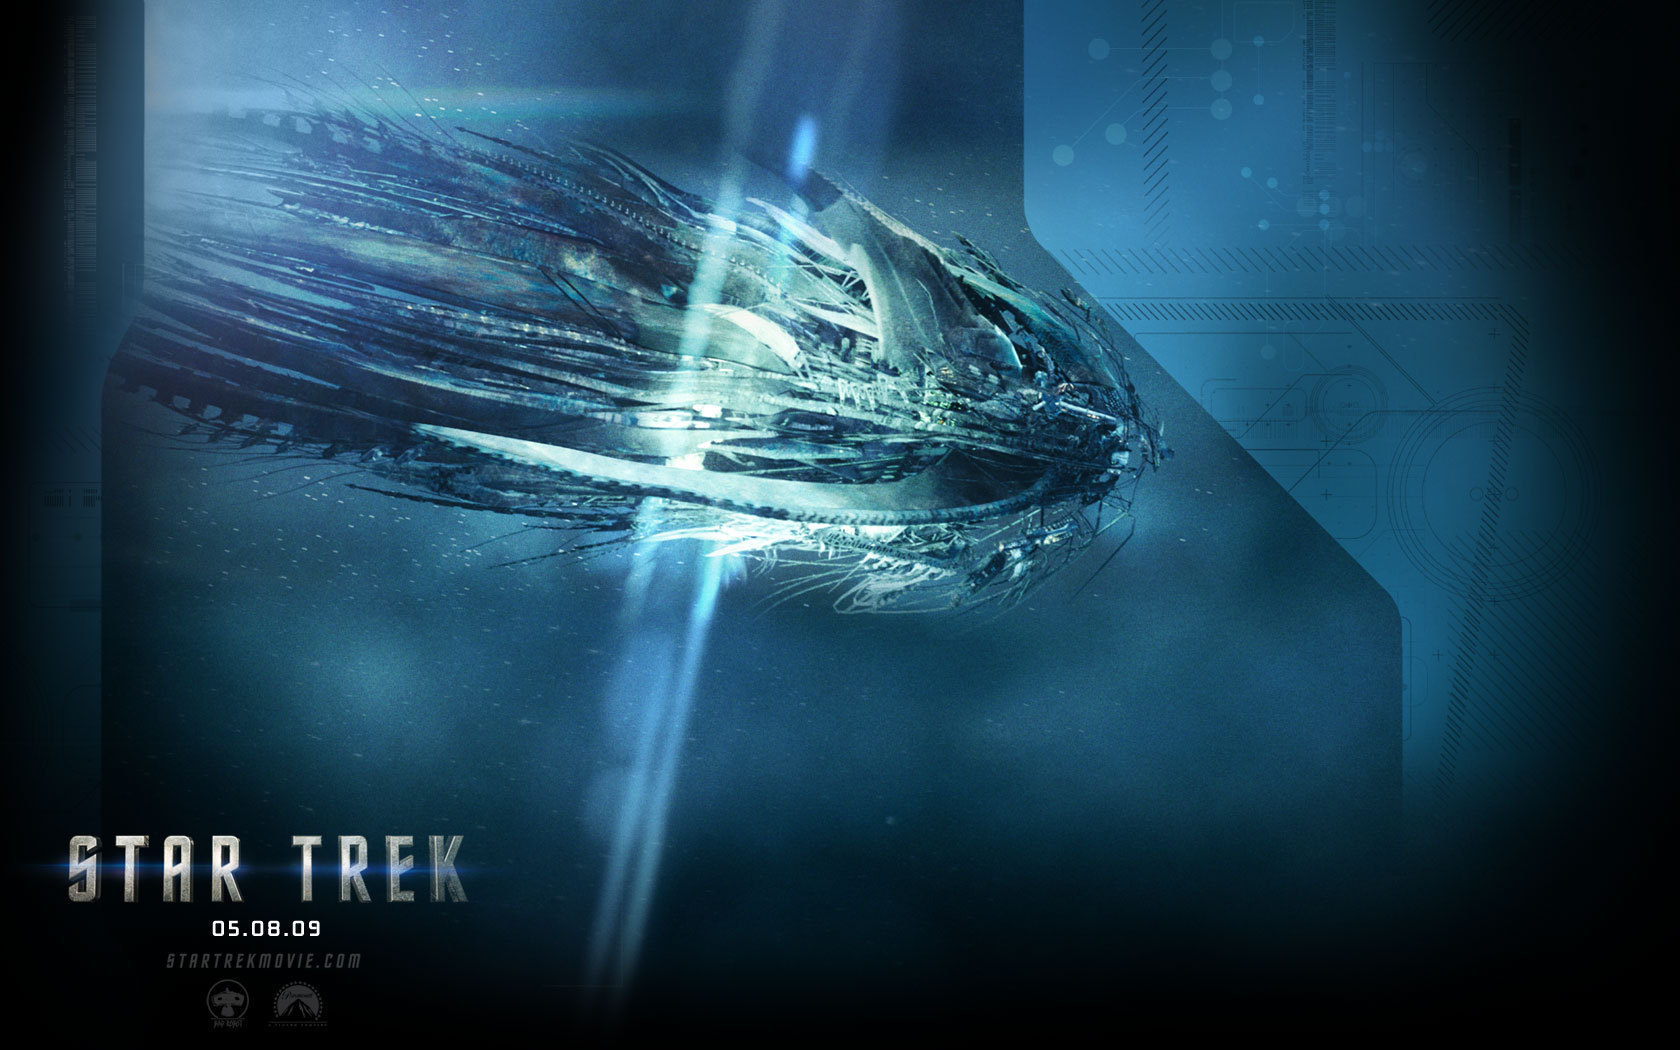 Bintang Trek Xi - Star Trek Movie Background - HD Wallpaper 